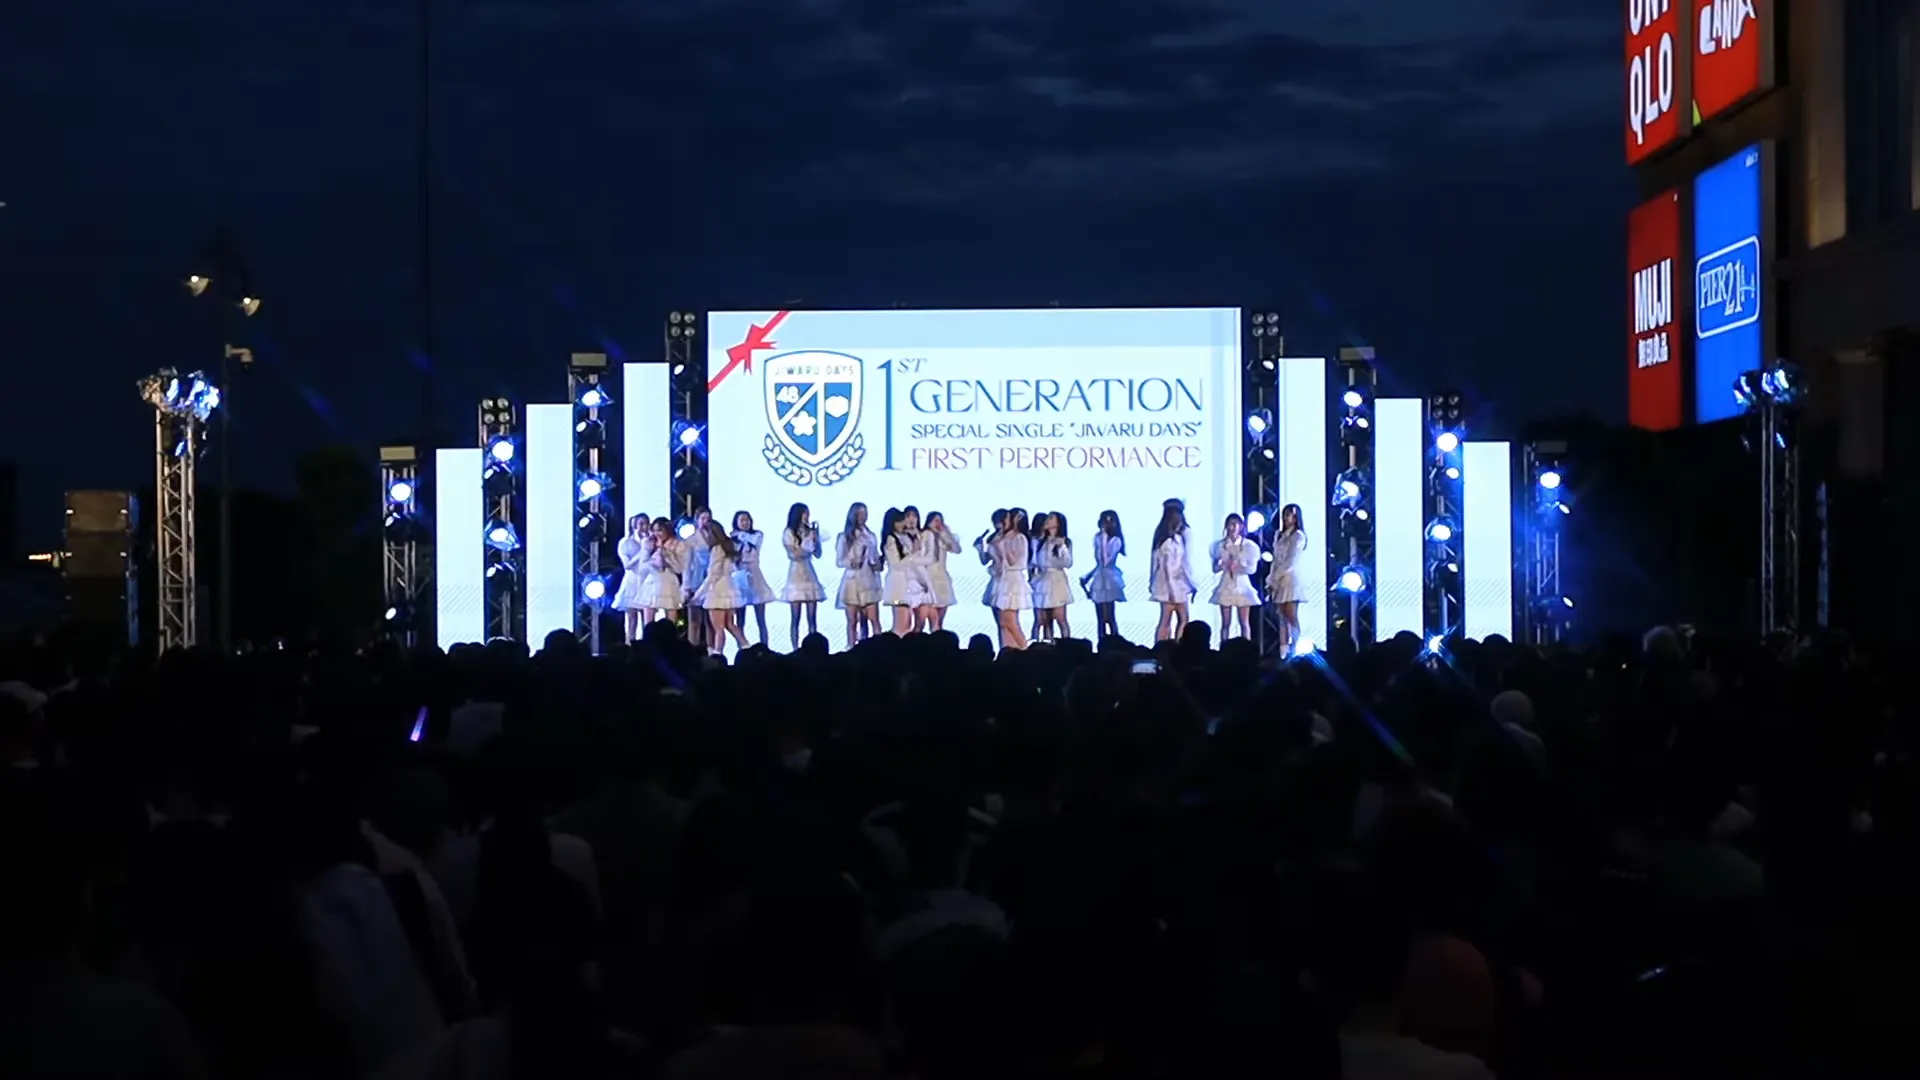 【LIVE】BNK48 1st GENERATION SPECIAL SINGLE「Jiwaru DAYS」FIRST PERFORMANCE BNK48 53 43 screenshot w